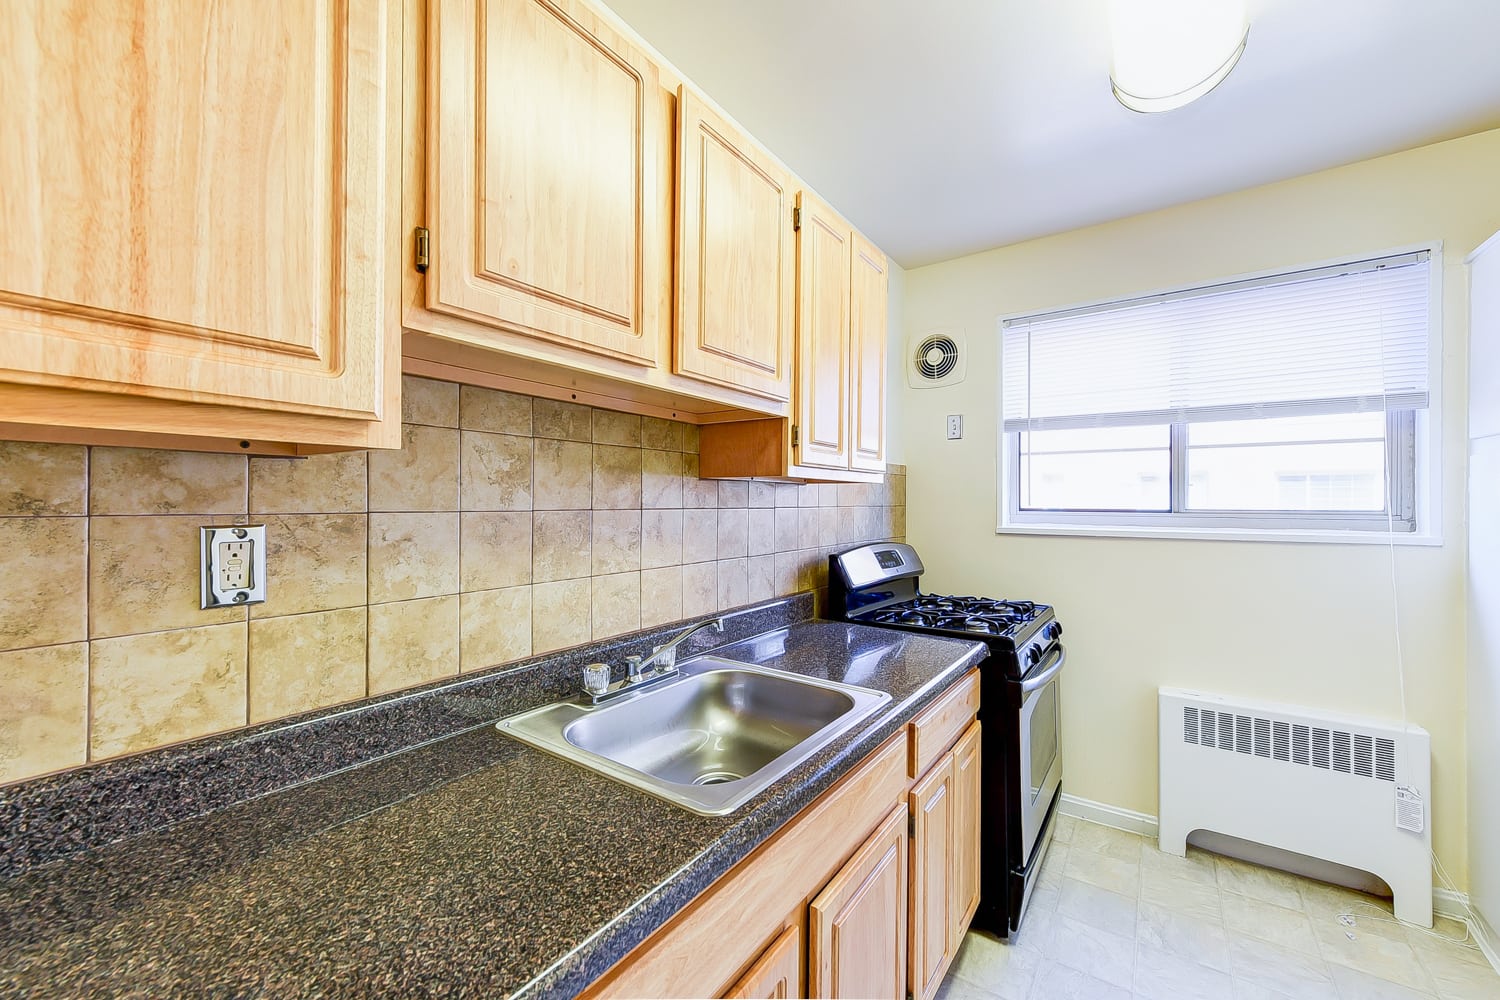 New Horizon Kitchen Cabinets Washington Dc Apartment Rental Wc Smith